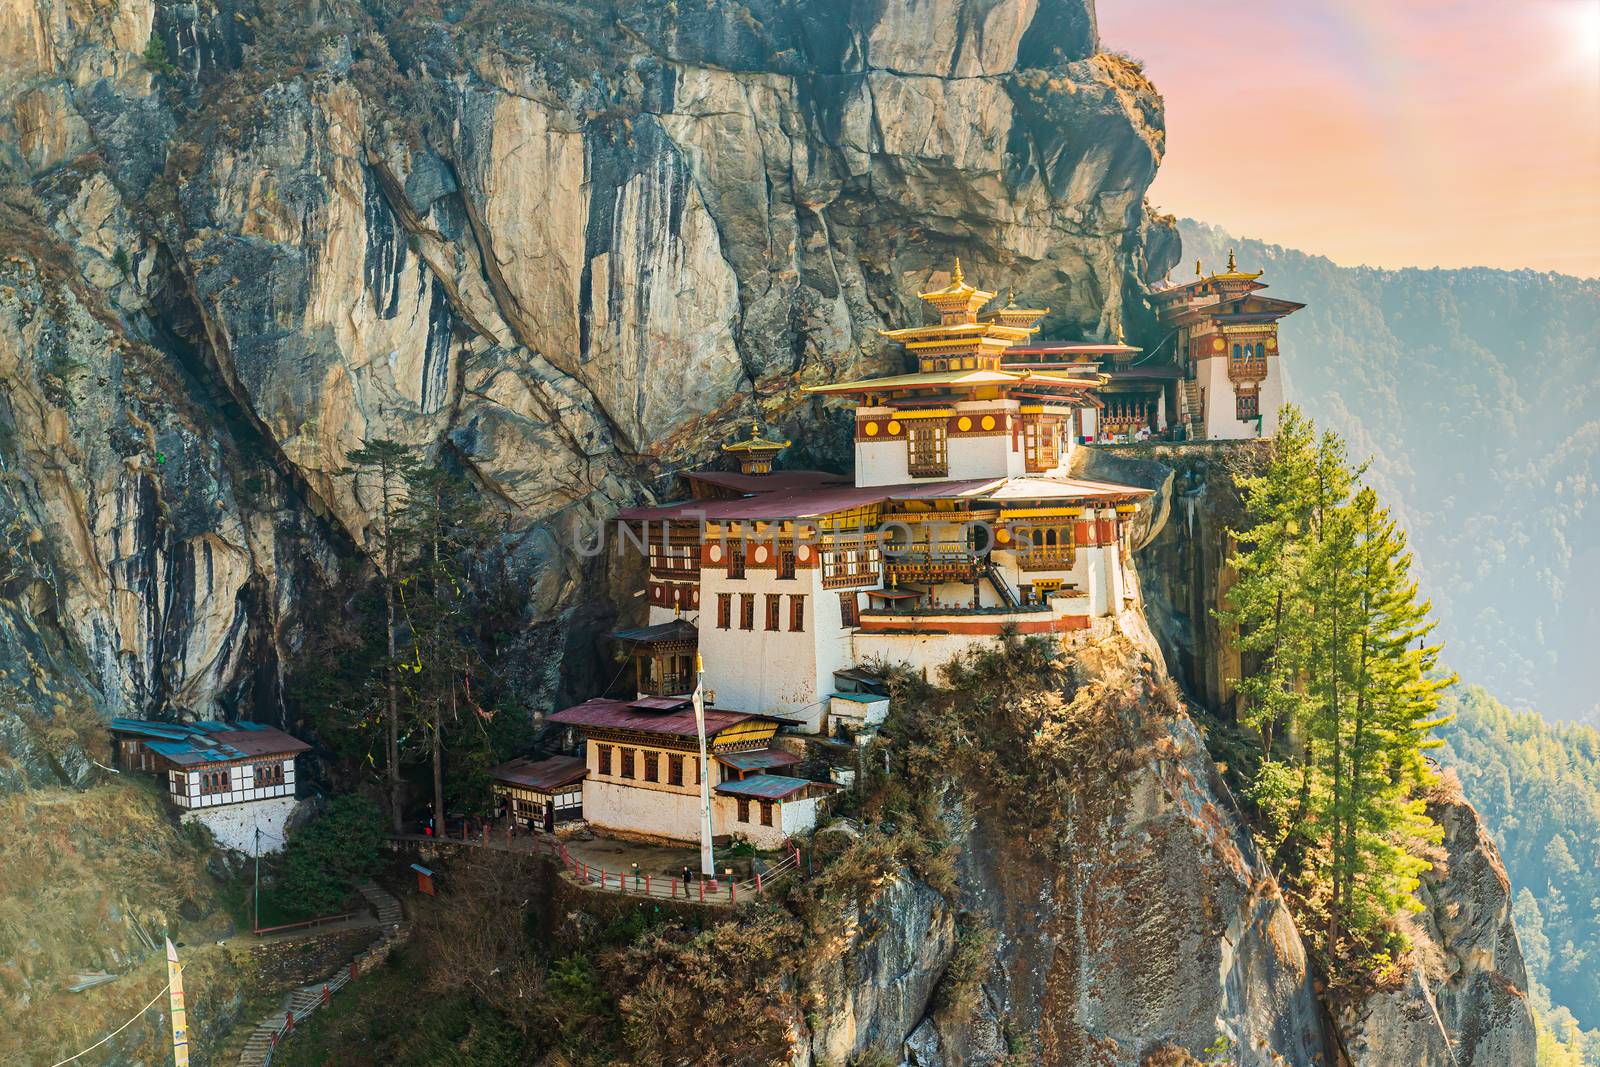 Taktshang Goemba or Tiger's Nest Monastery in Bhutan by COffe